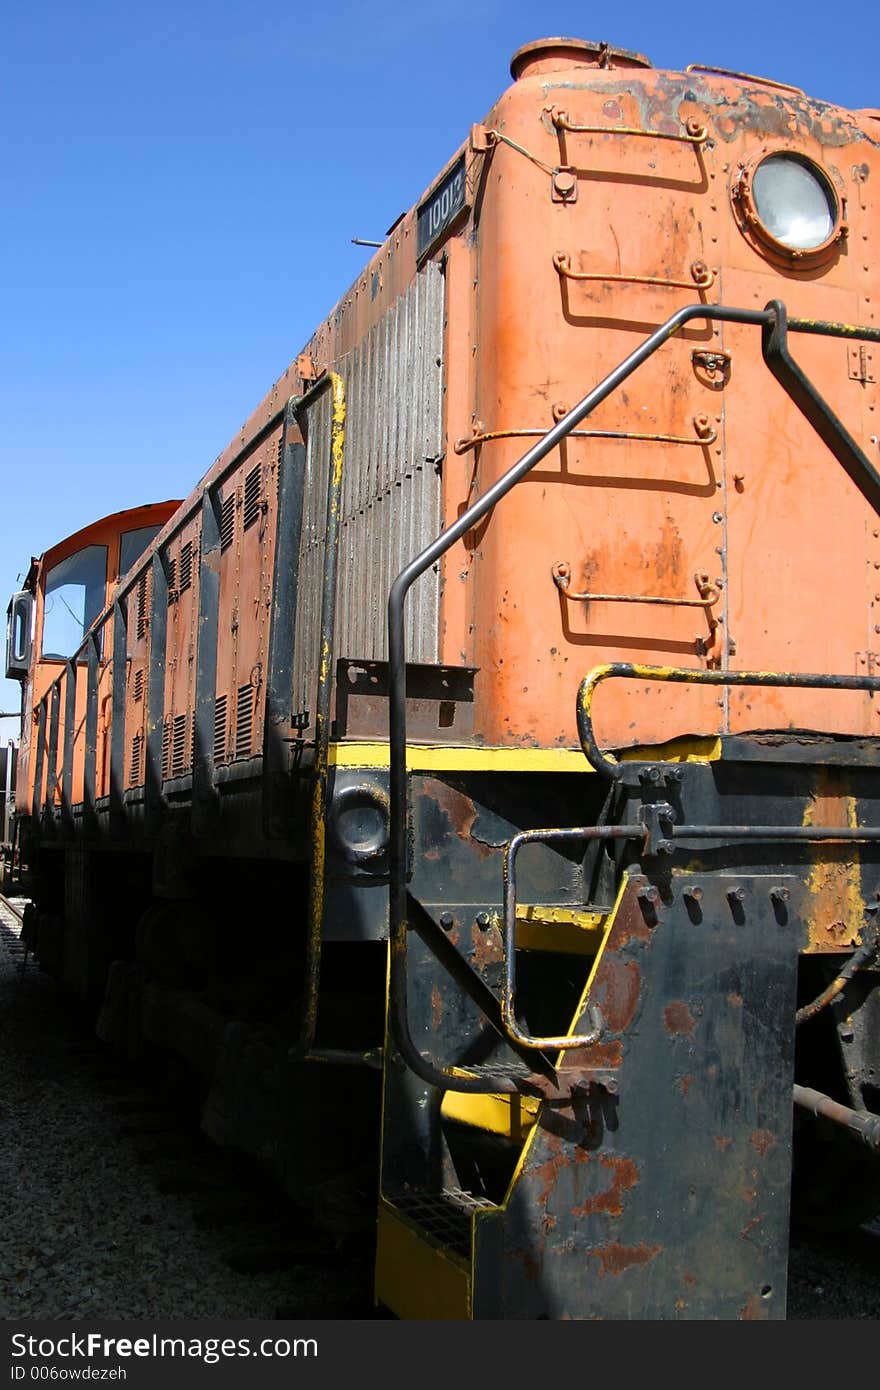 Old weathered orange train engine against a blue sky.